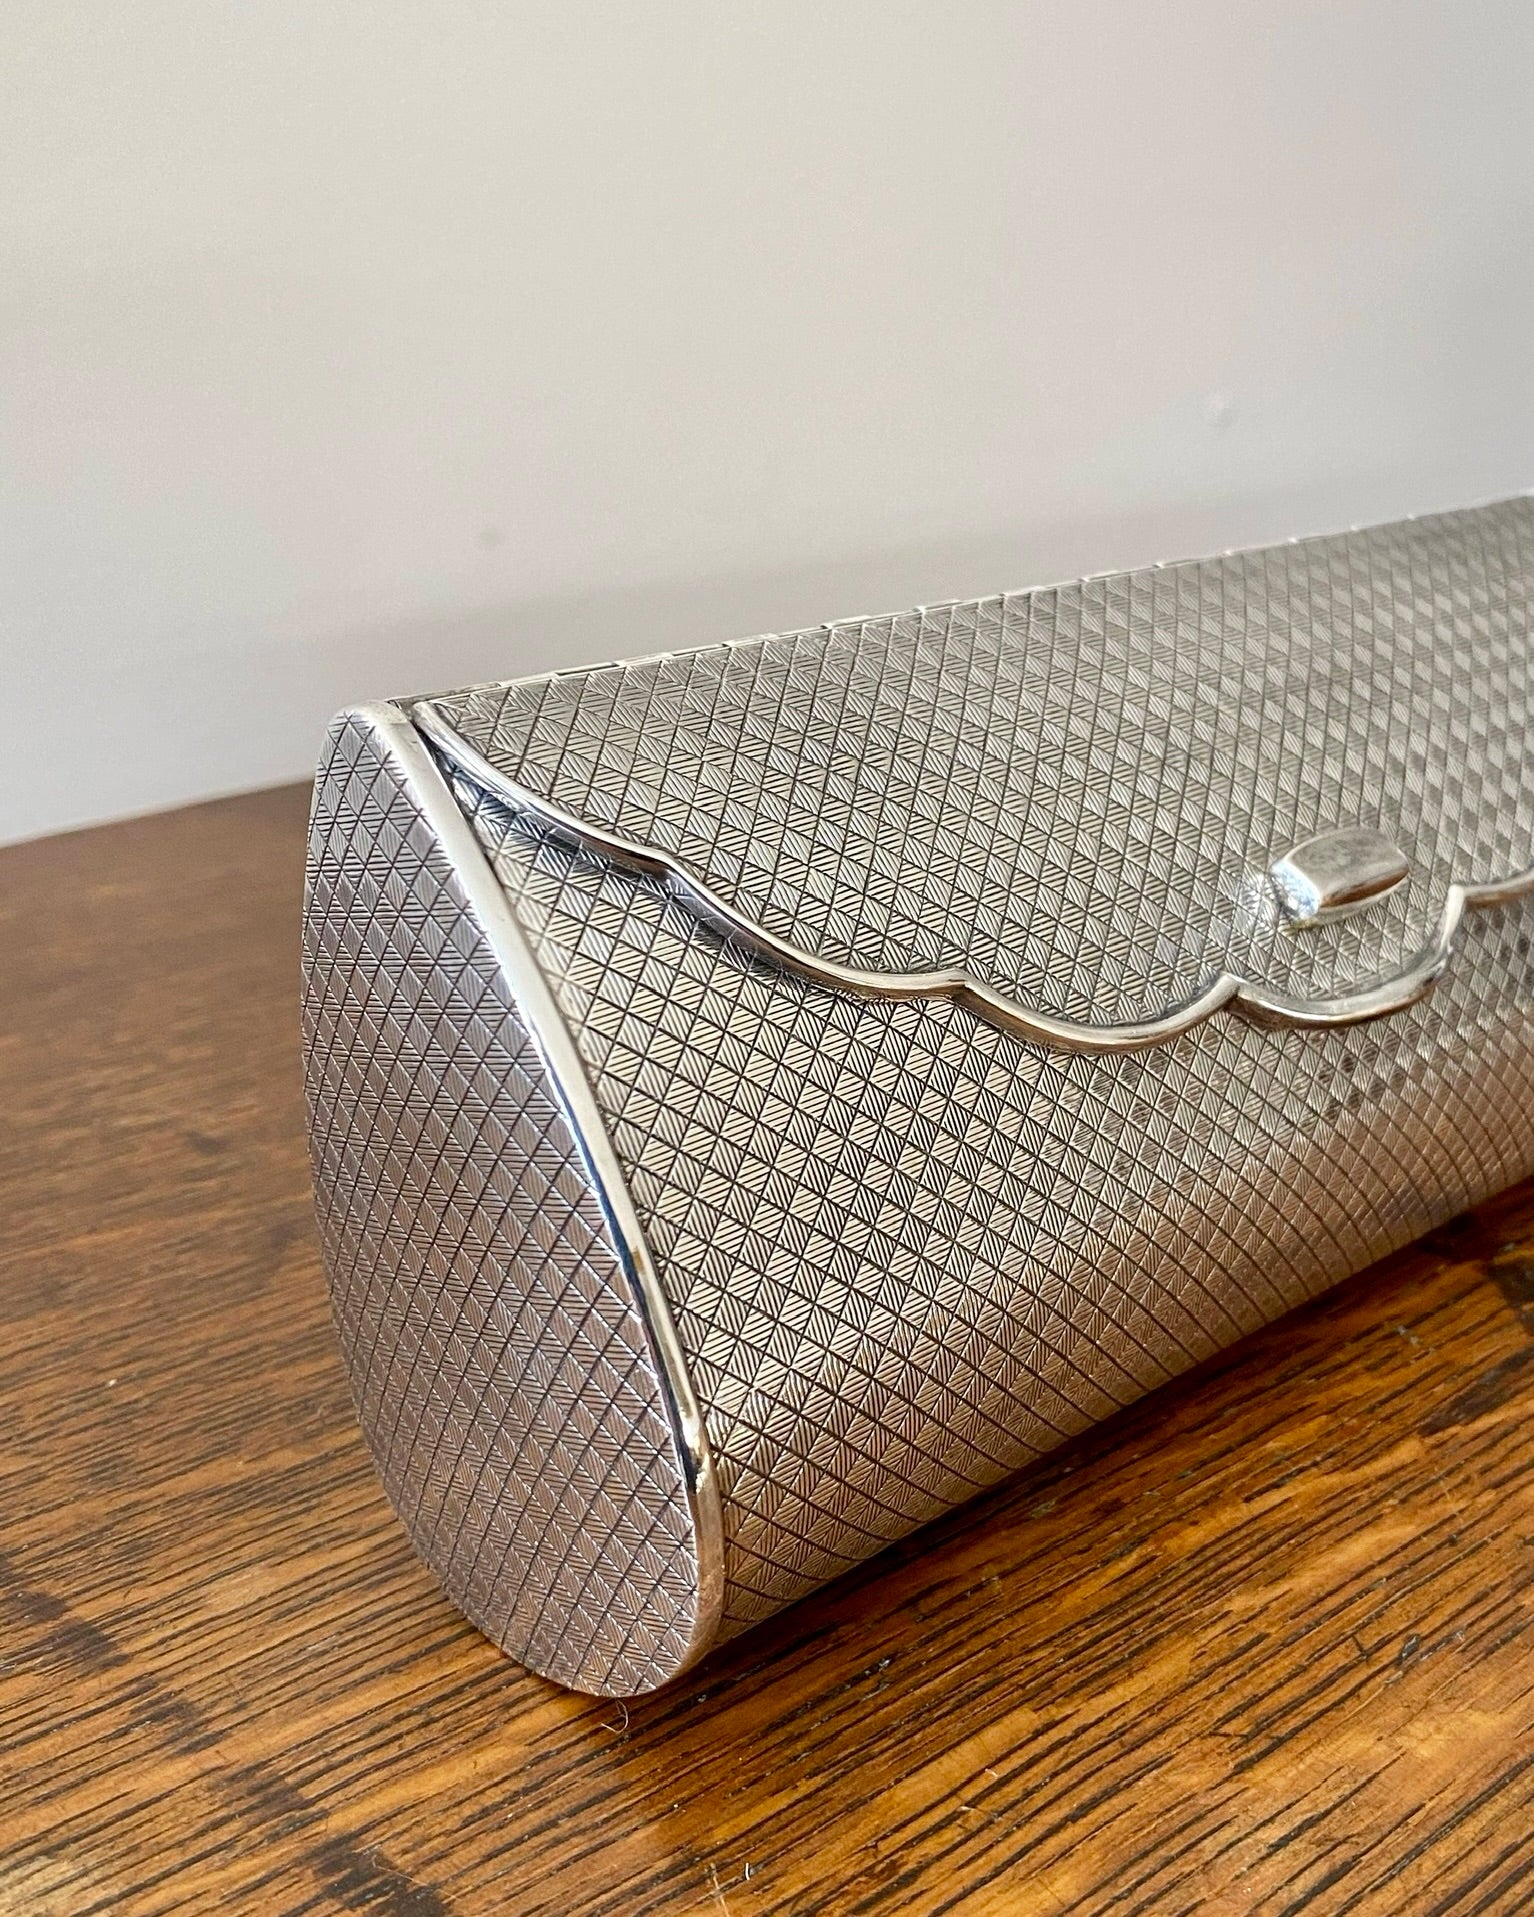 Vintage 1950s Mid Century Silver Plated Metal Diamond Pattern Box Clutch Purse Handbag Made in Japan